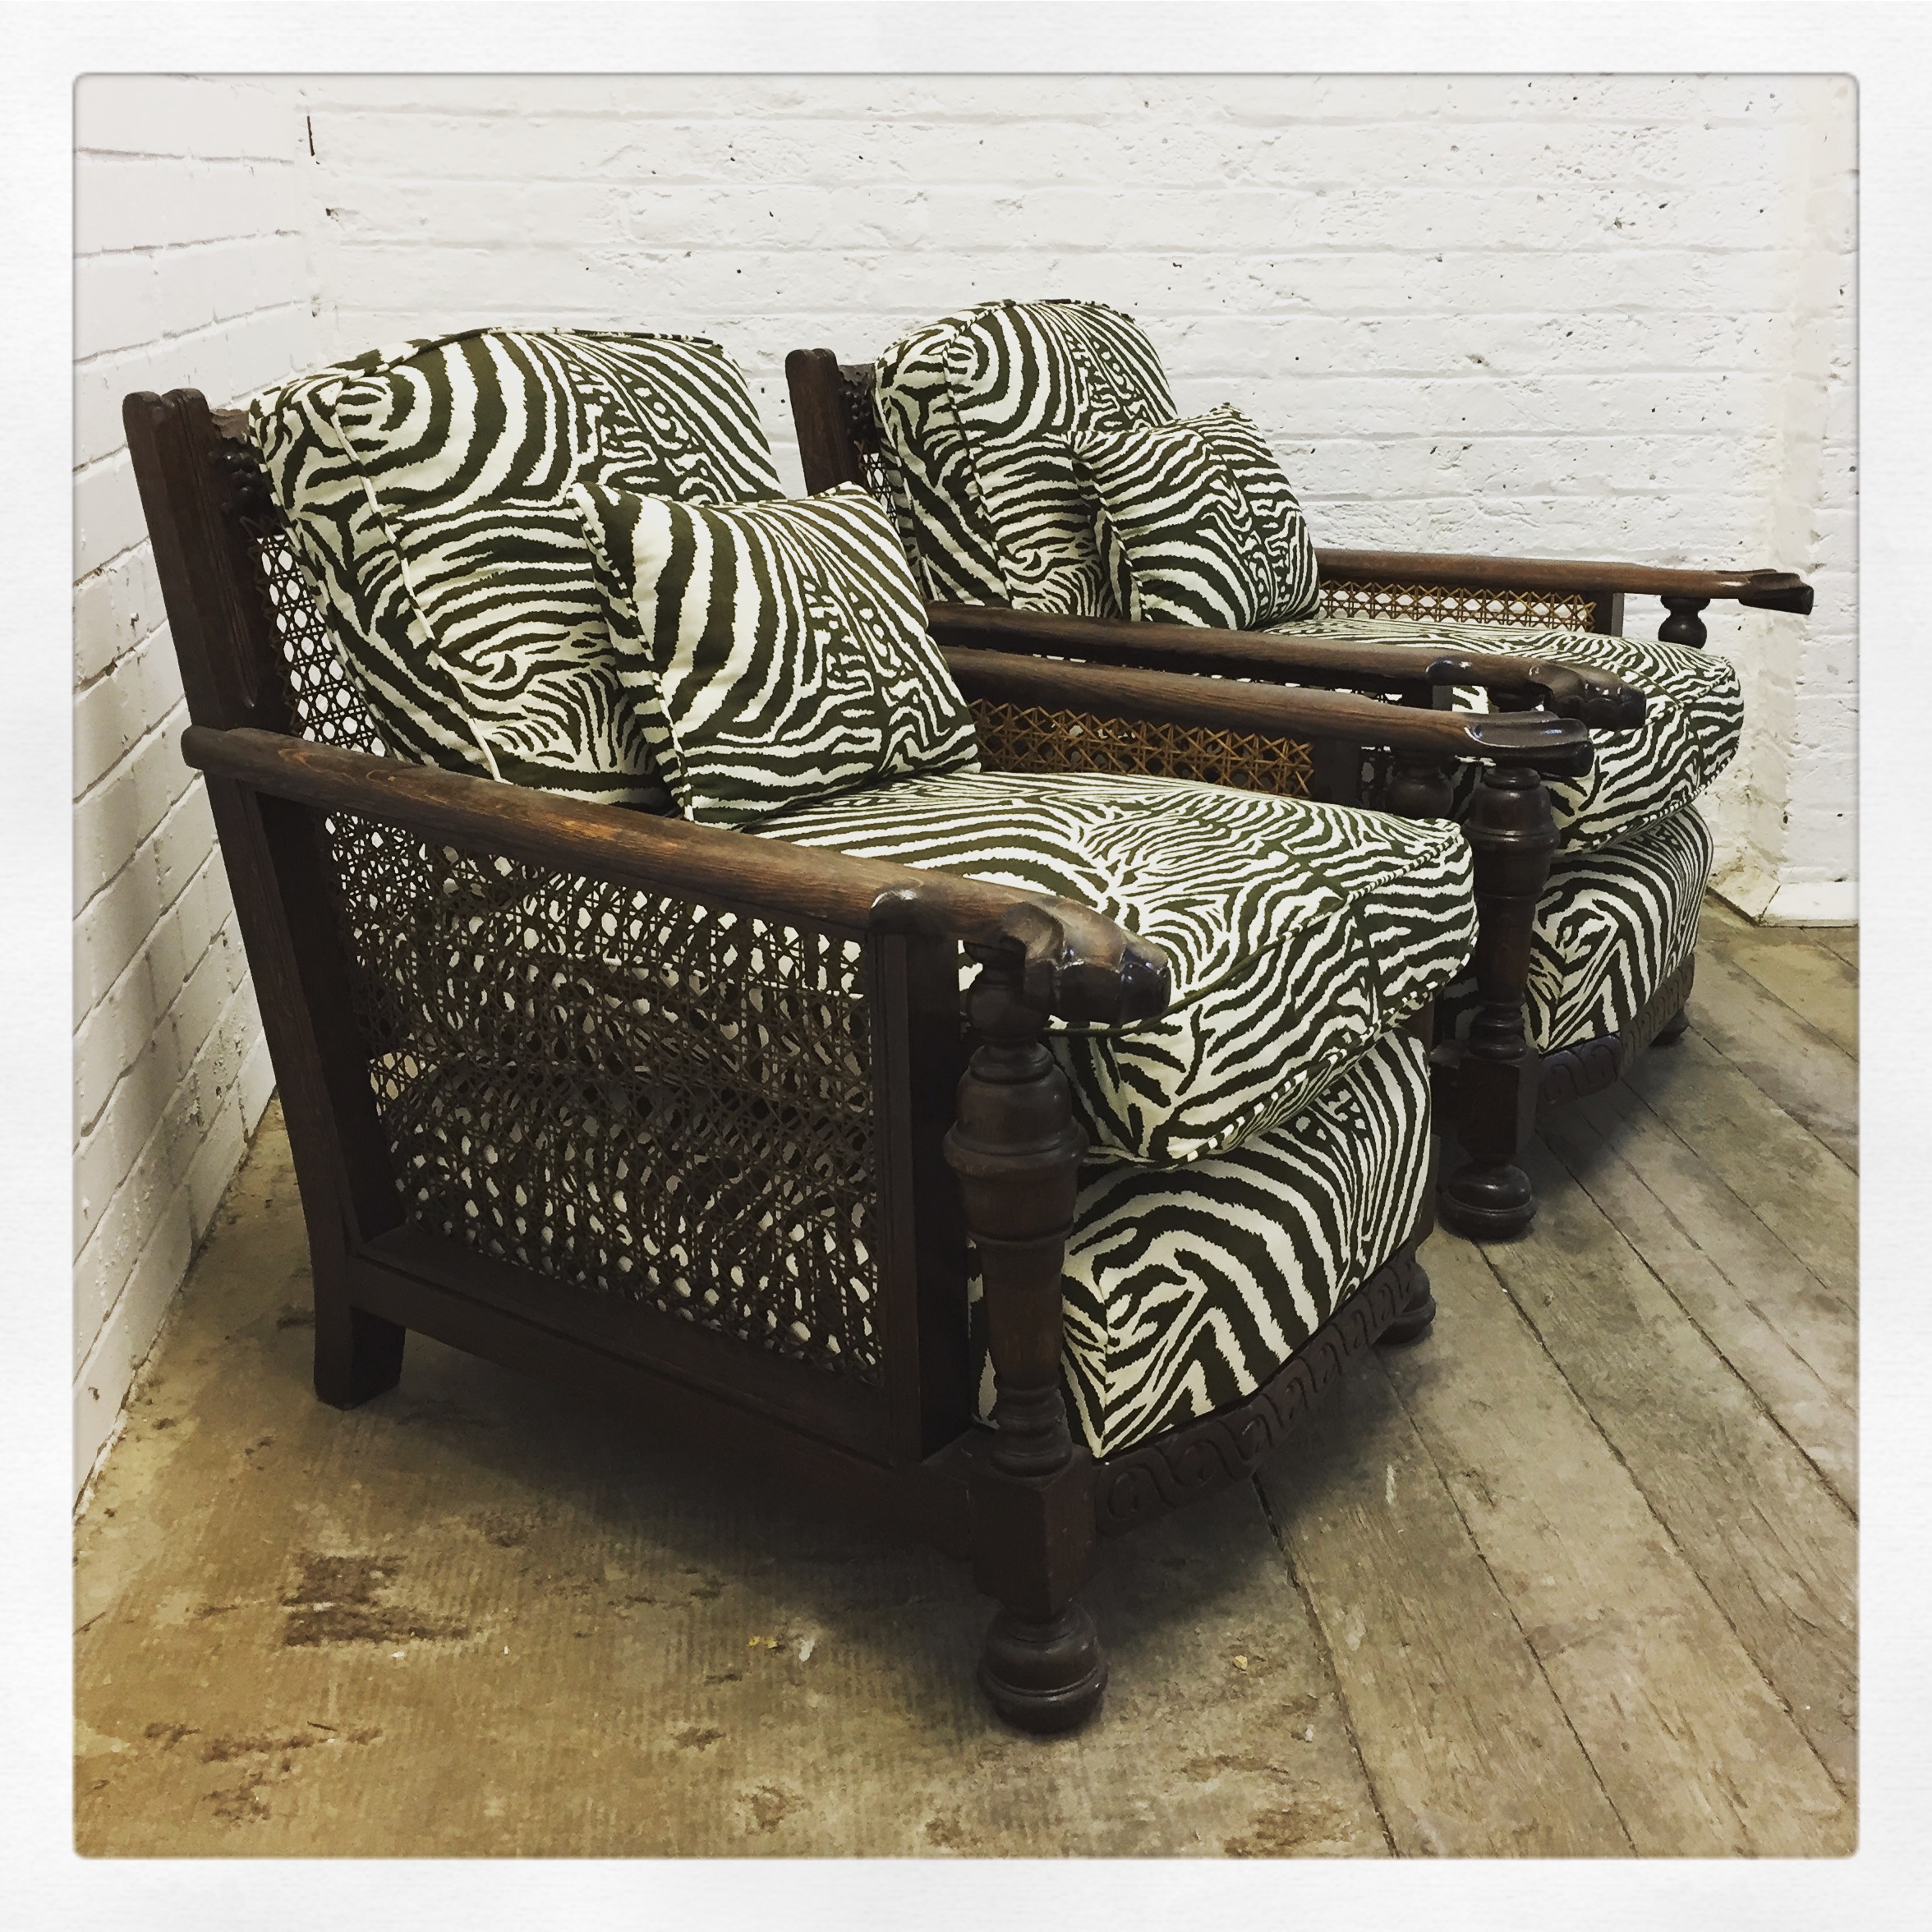 Chair Reupholstery in Zebra Print